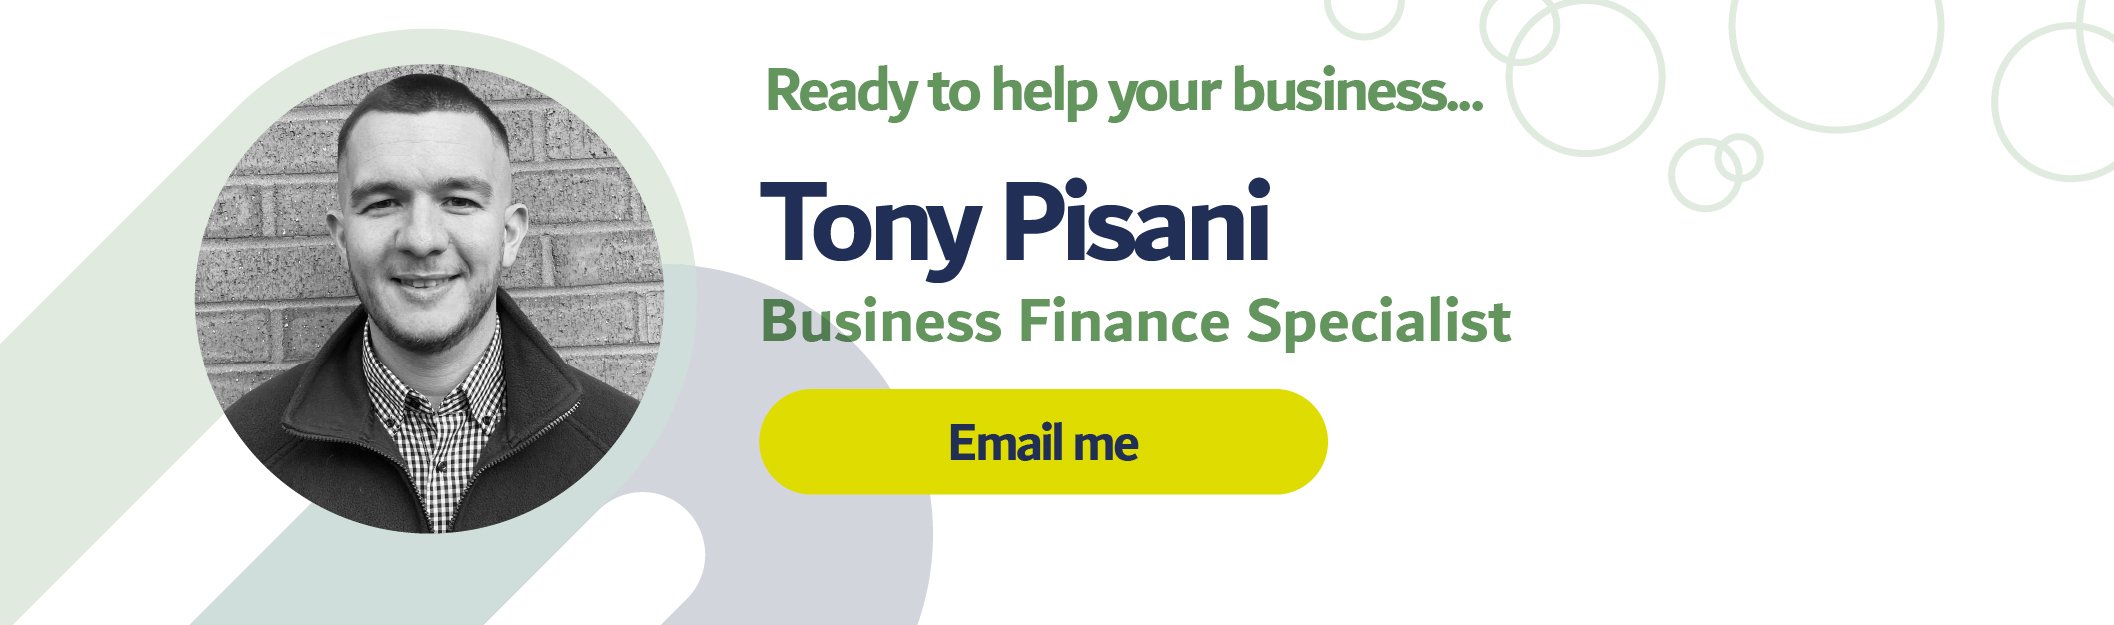 Tony Pisani, Business Finance Specialist at Millbrook